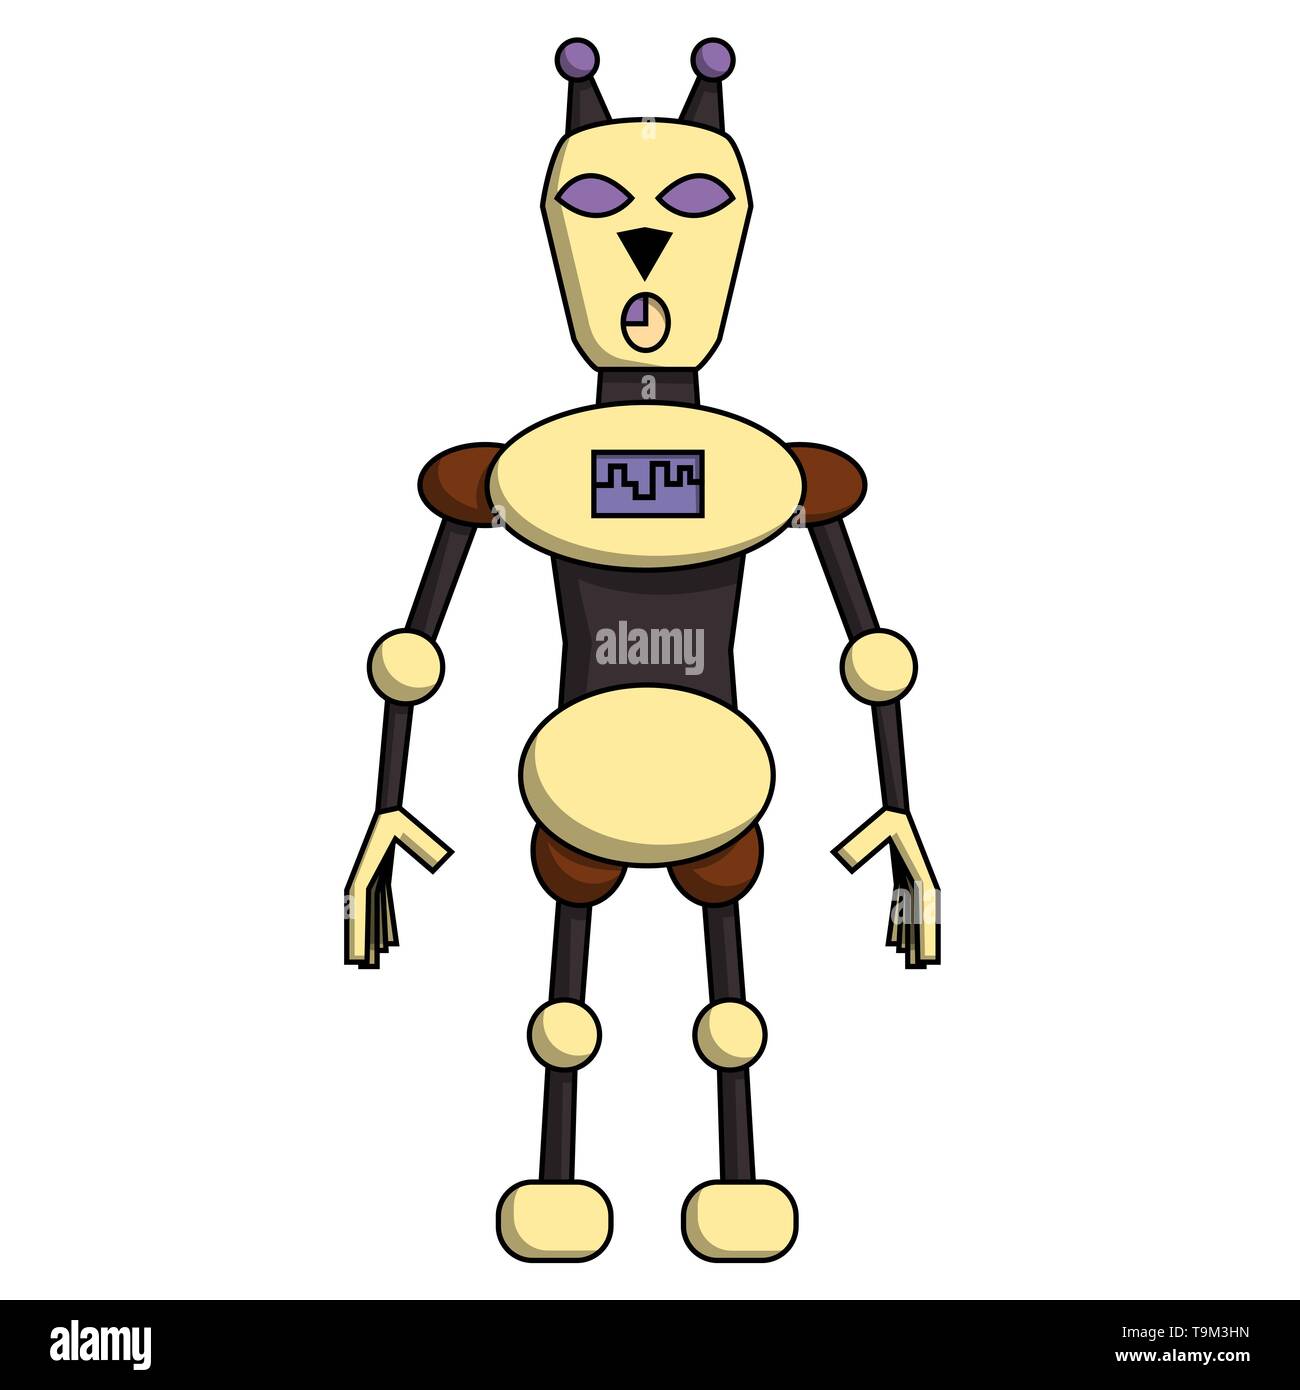 https://c8.alamy.com/comp/T9M3HN/robot-cat-cartoon-character-isolated-vector-illustration-T9M3HN.jpg